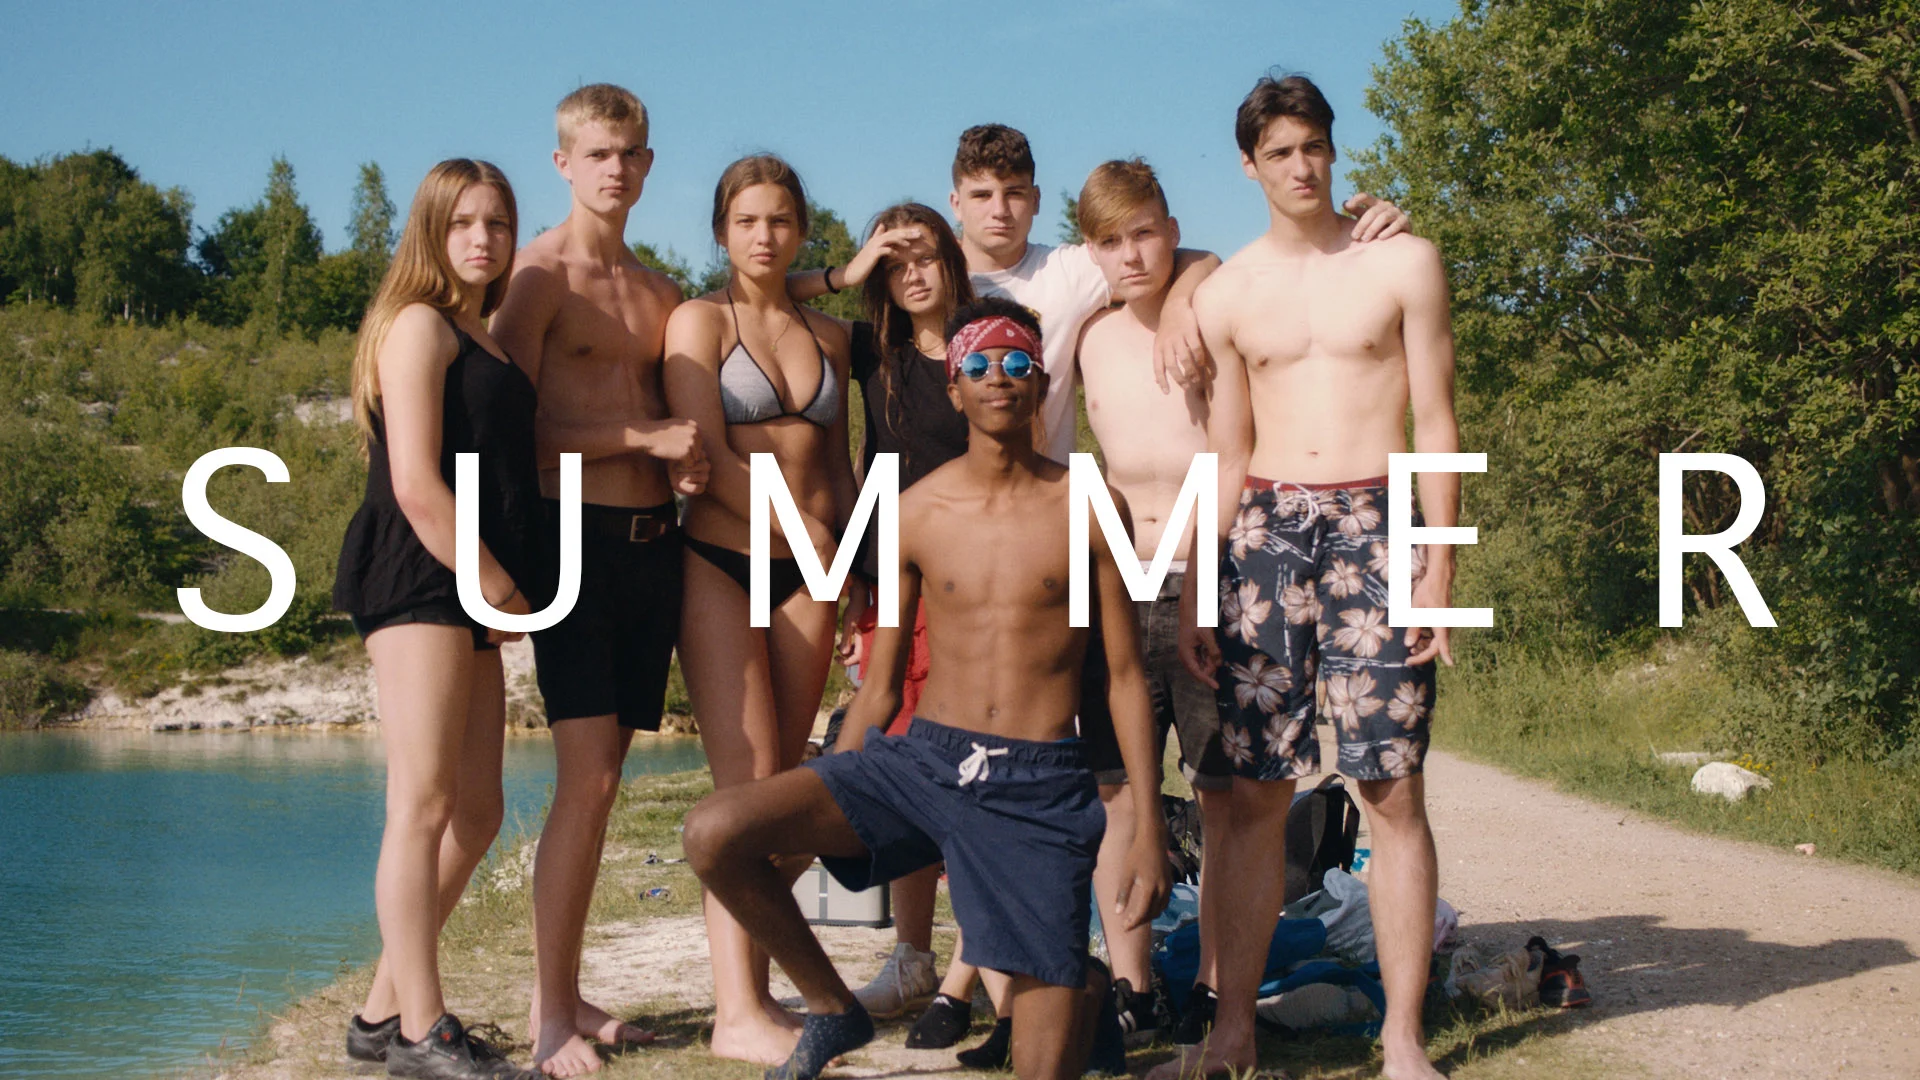 THE SUMMER - Document ( Short documentary )  